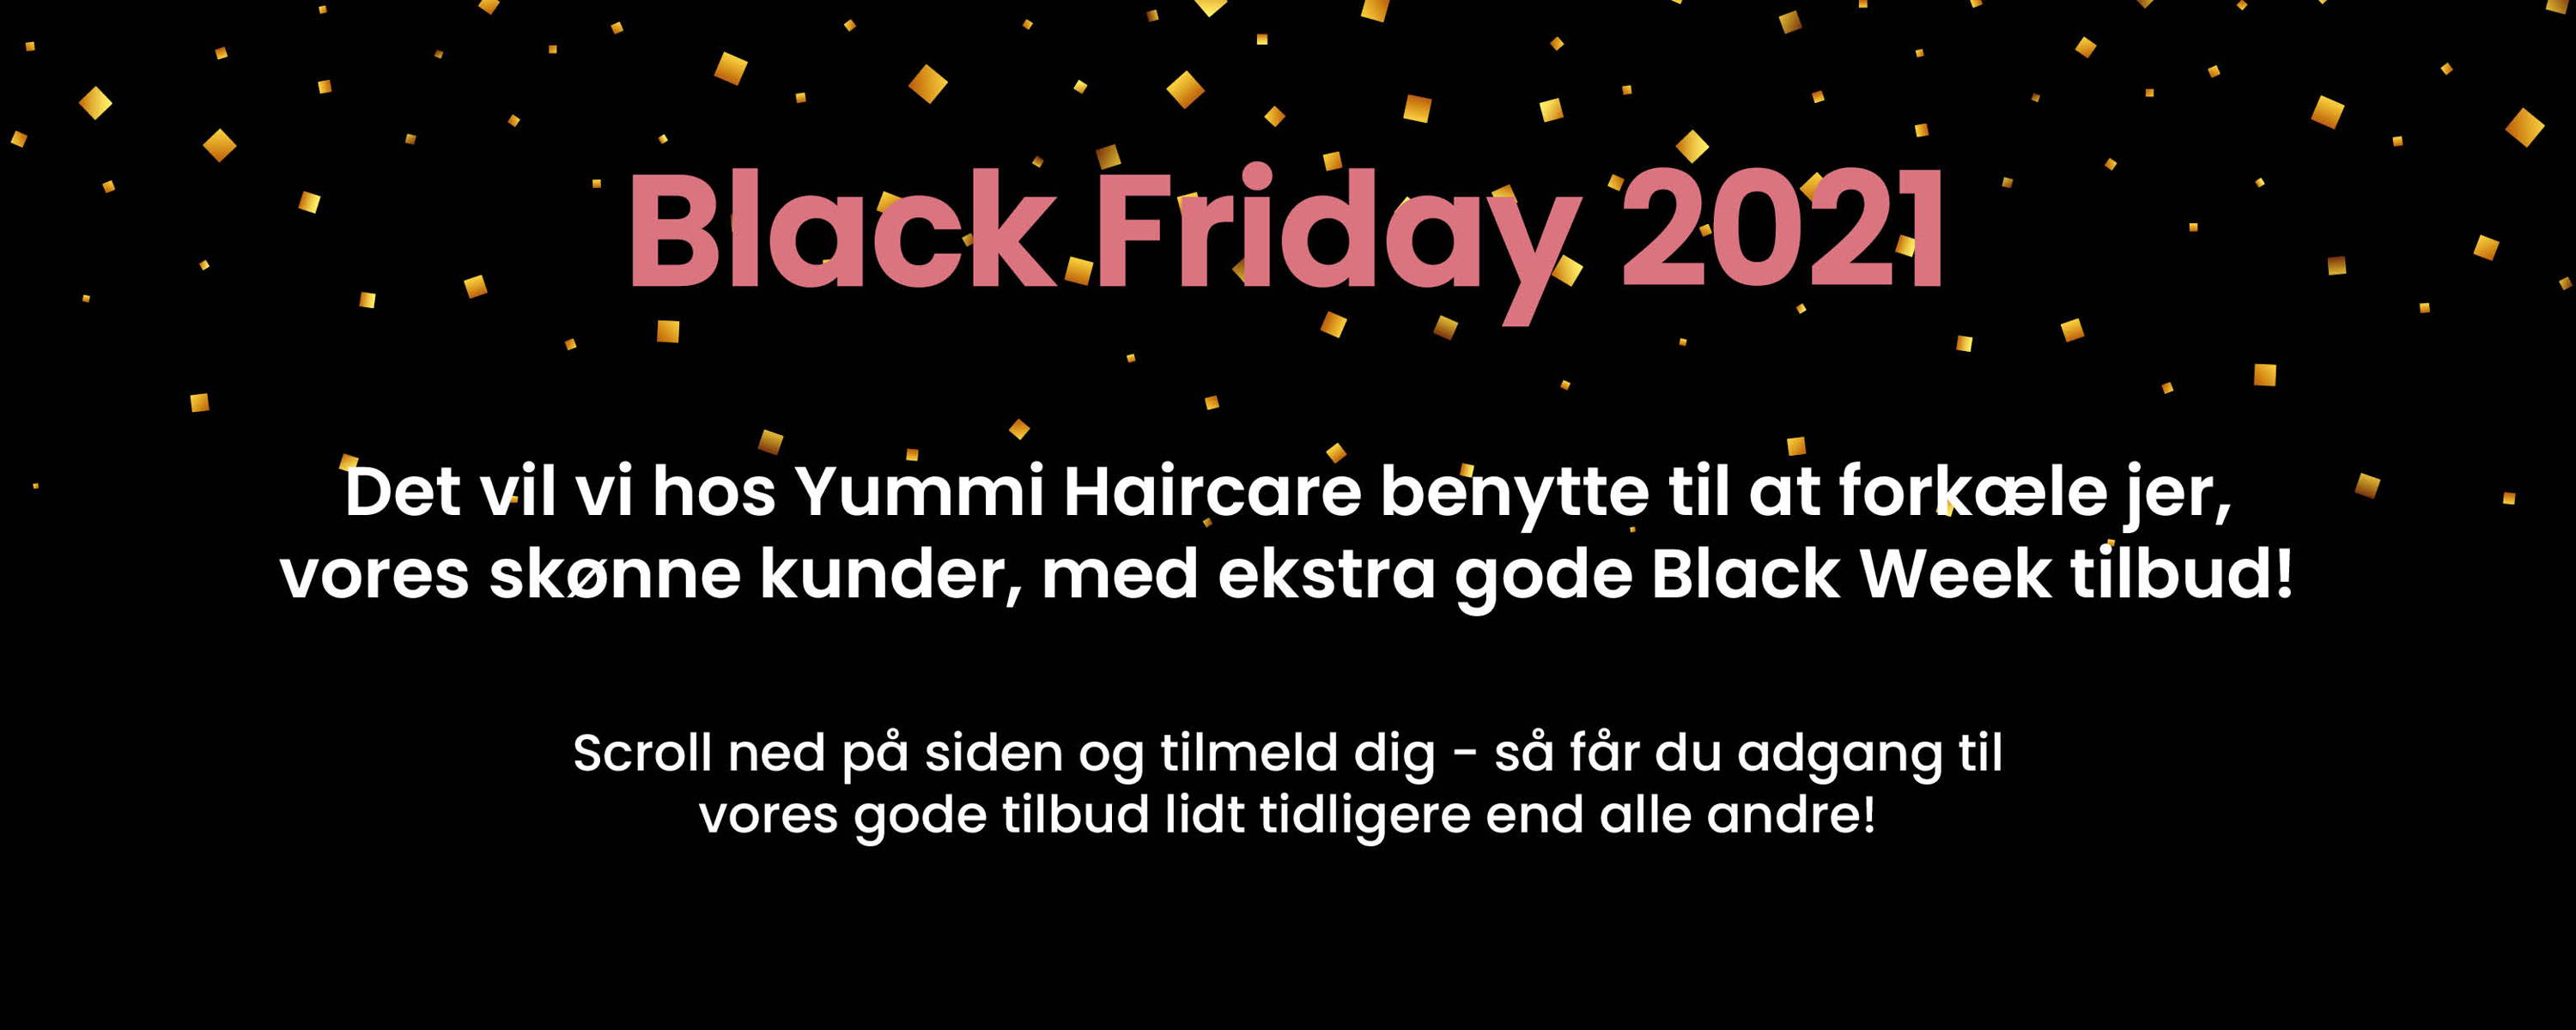 Black Friday 2021 hos Yummi Haircare bliver helt vild!